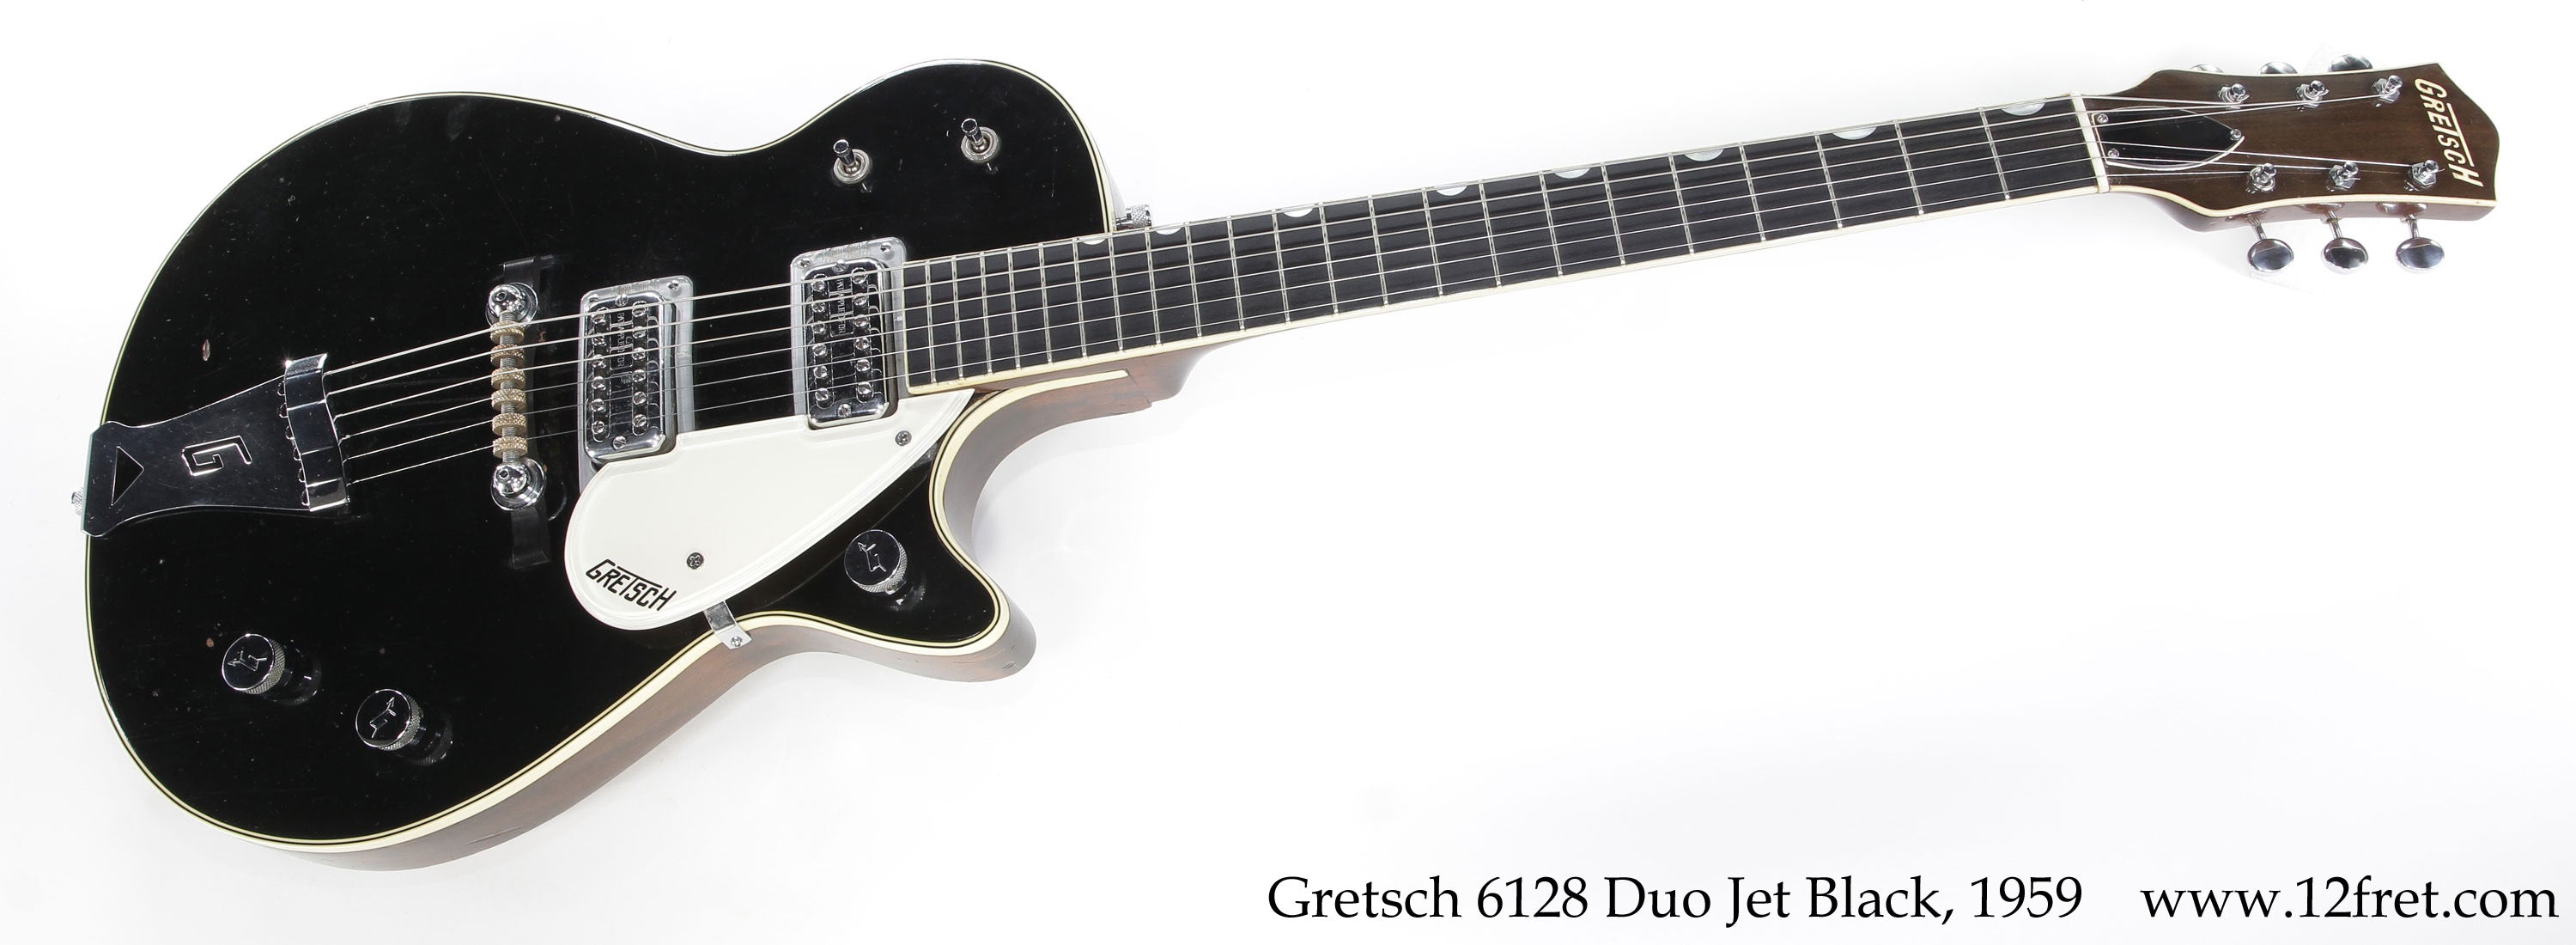 Gretsch 6128 Duo Jet Black, 1959 - The Twelfth Fret